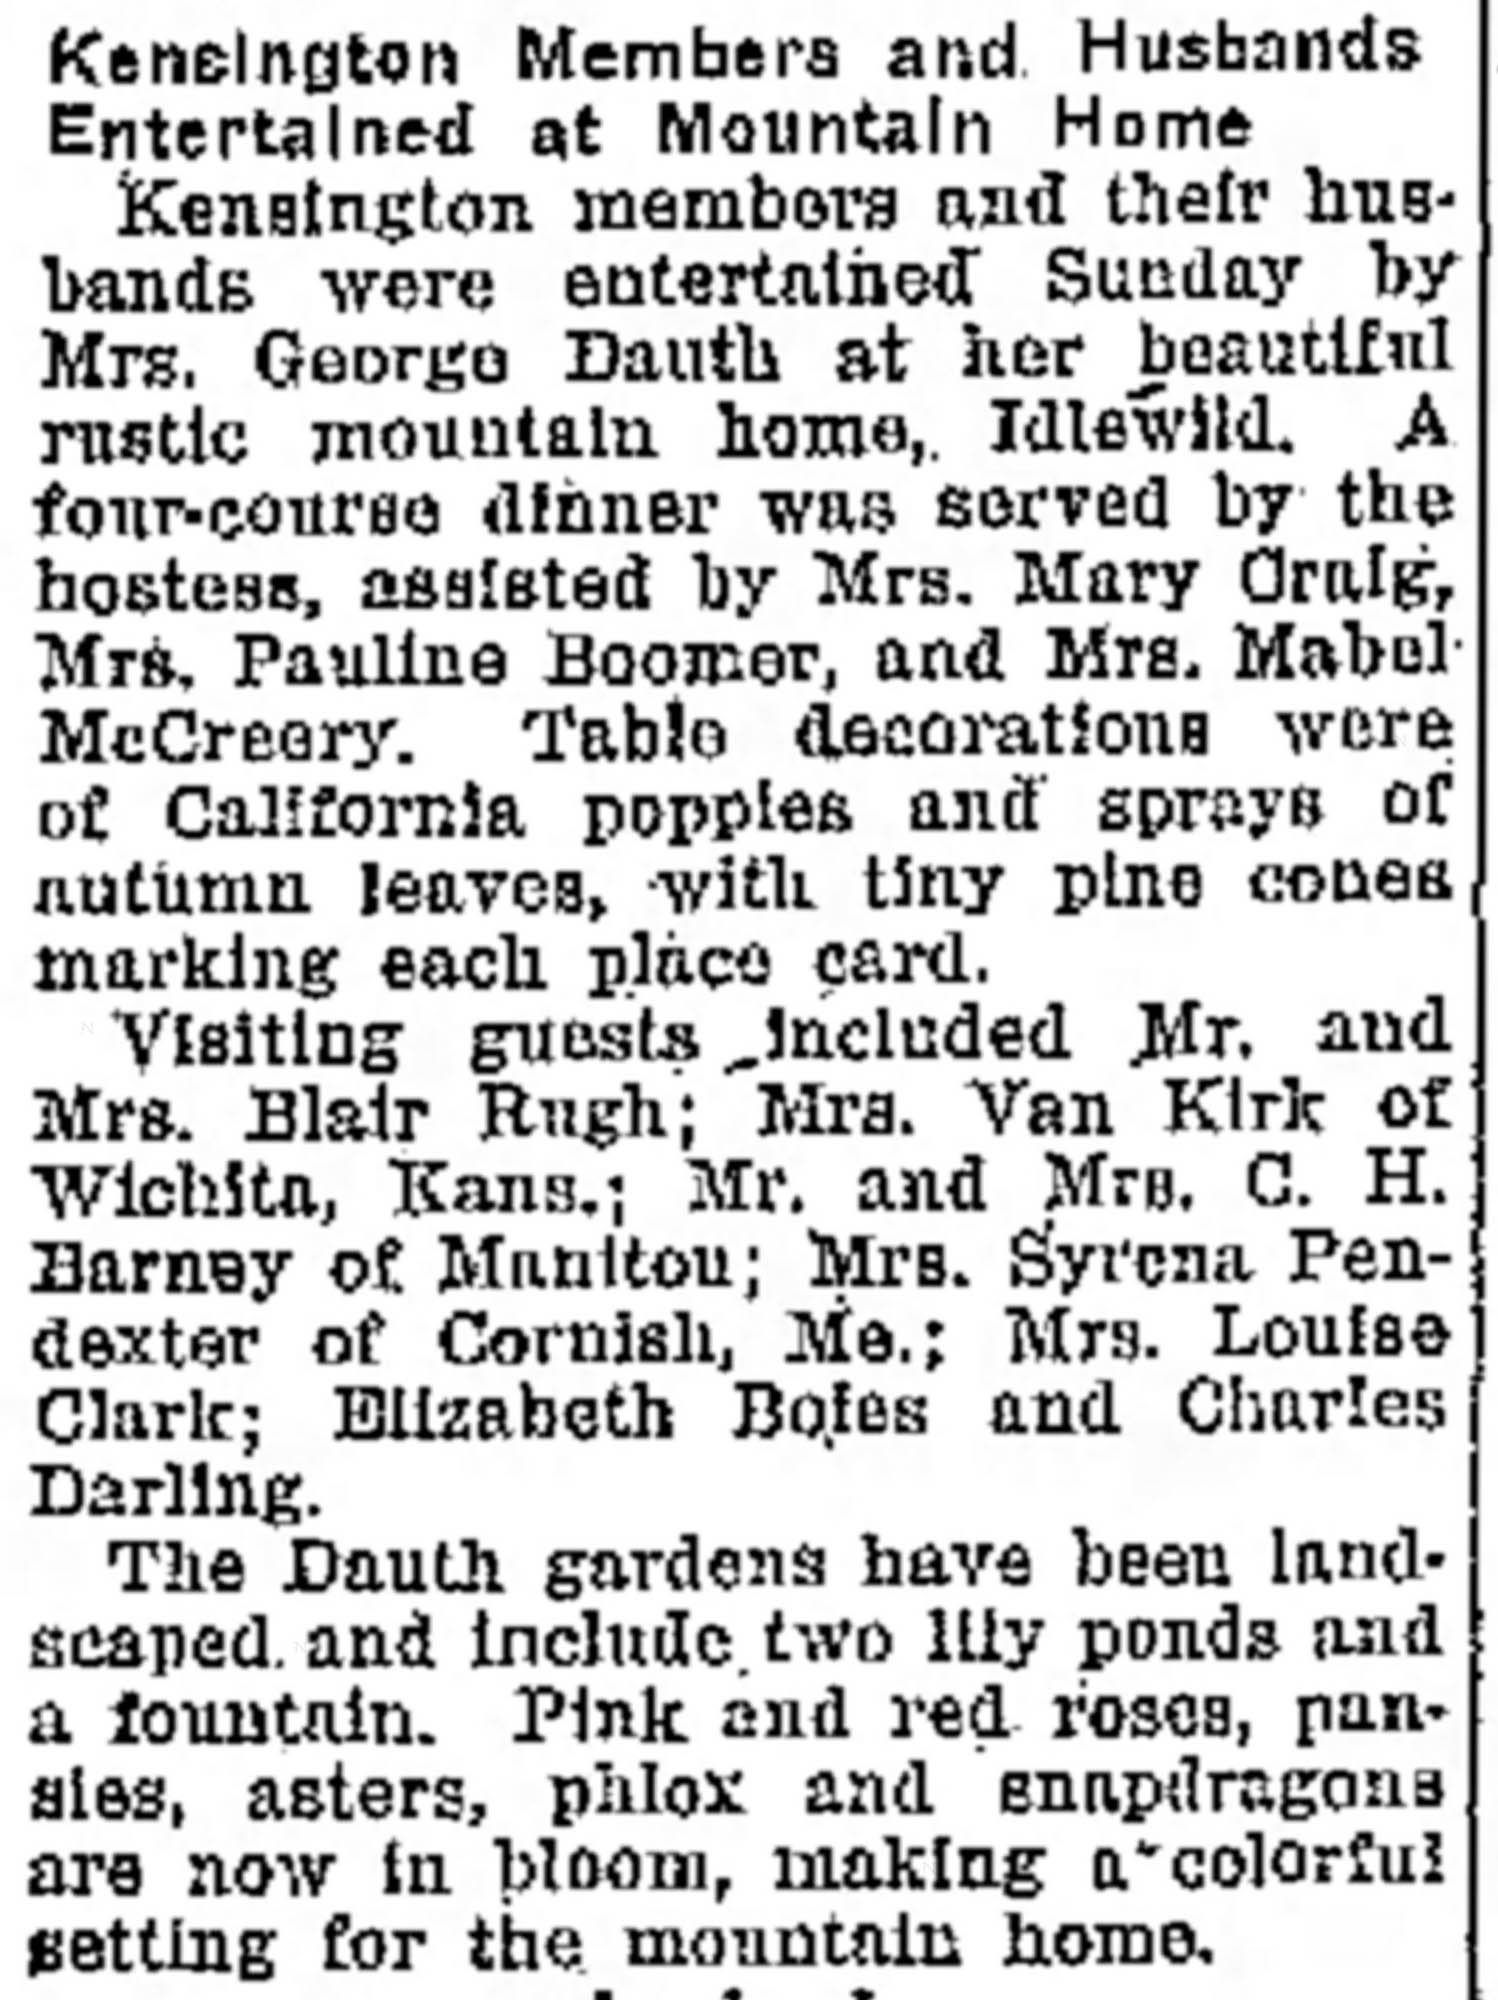 Idlewild Lodge - idlewildlodge.github.io - 1929-09-24 - Greeley Daily Tribune - Florence Dauth Hosting Kensington Club At Idlewild